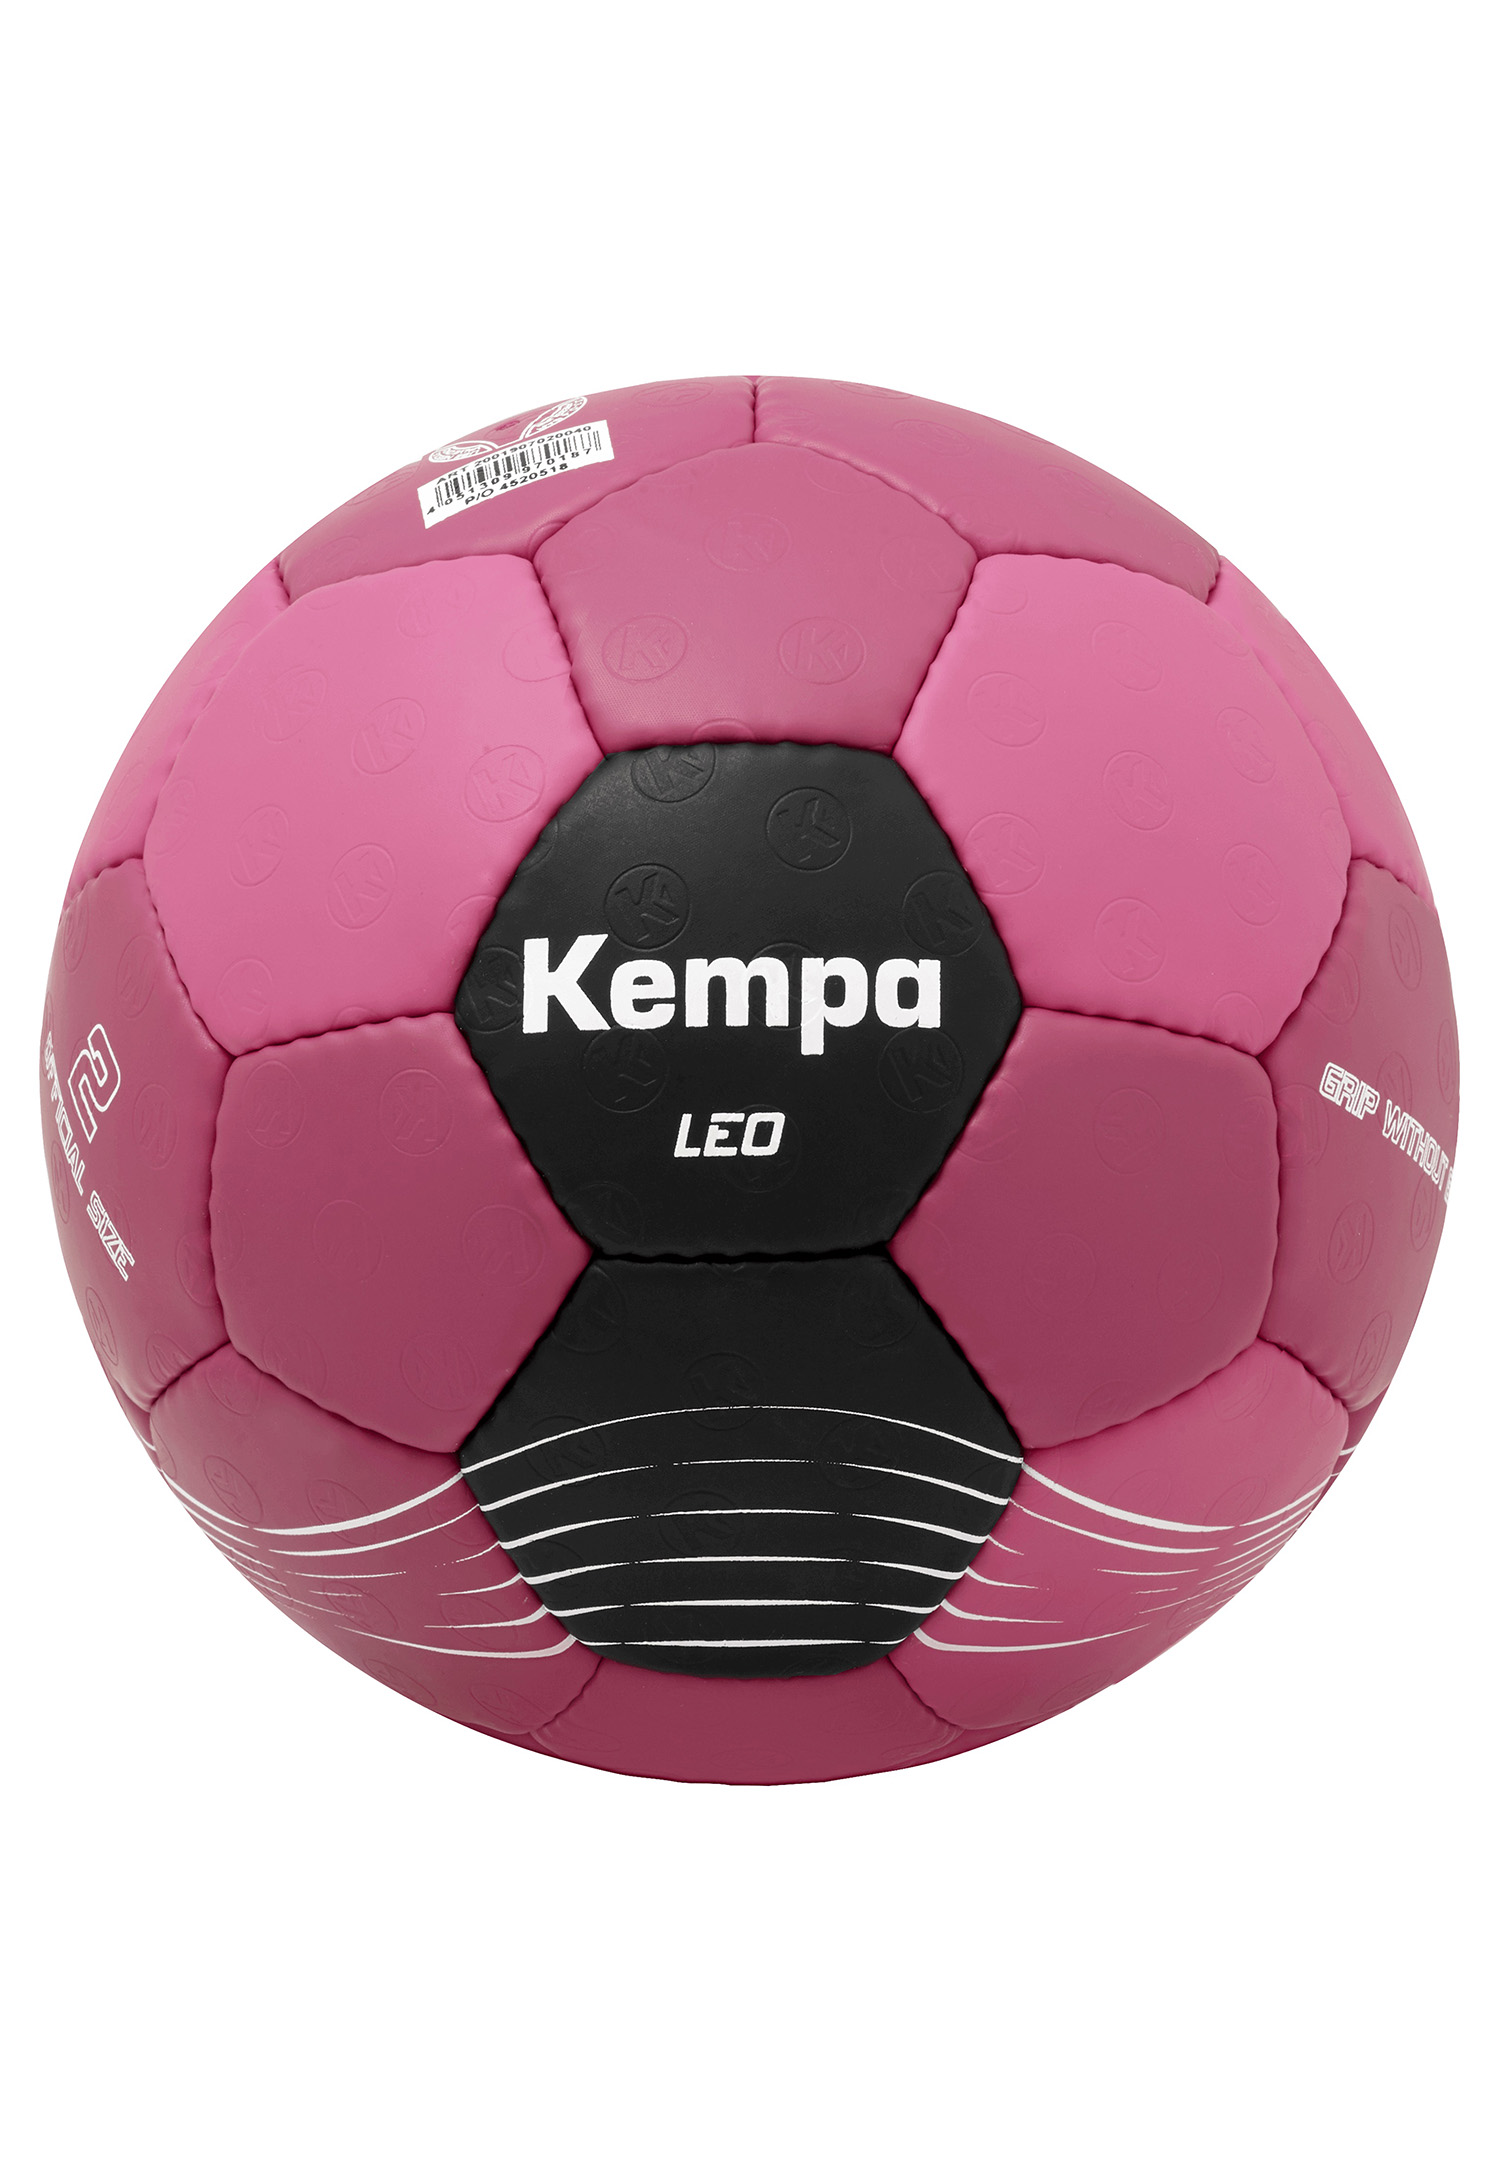 Kempa Handball Leo Size 1 200190702 burgundy/black